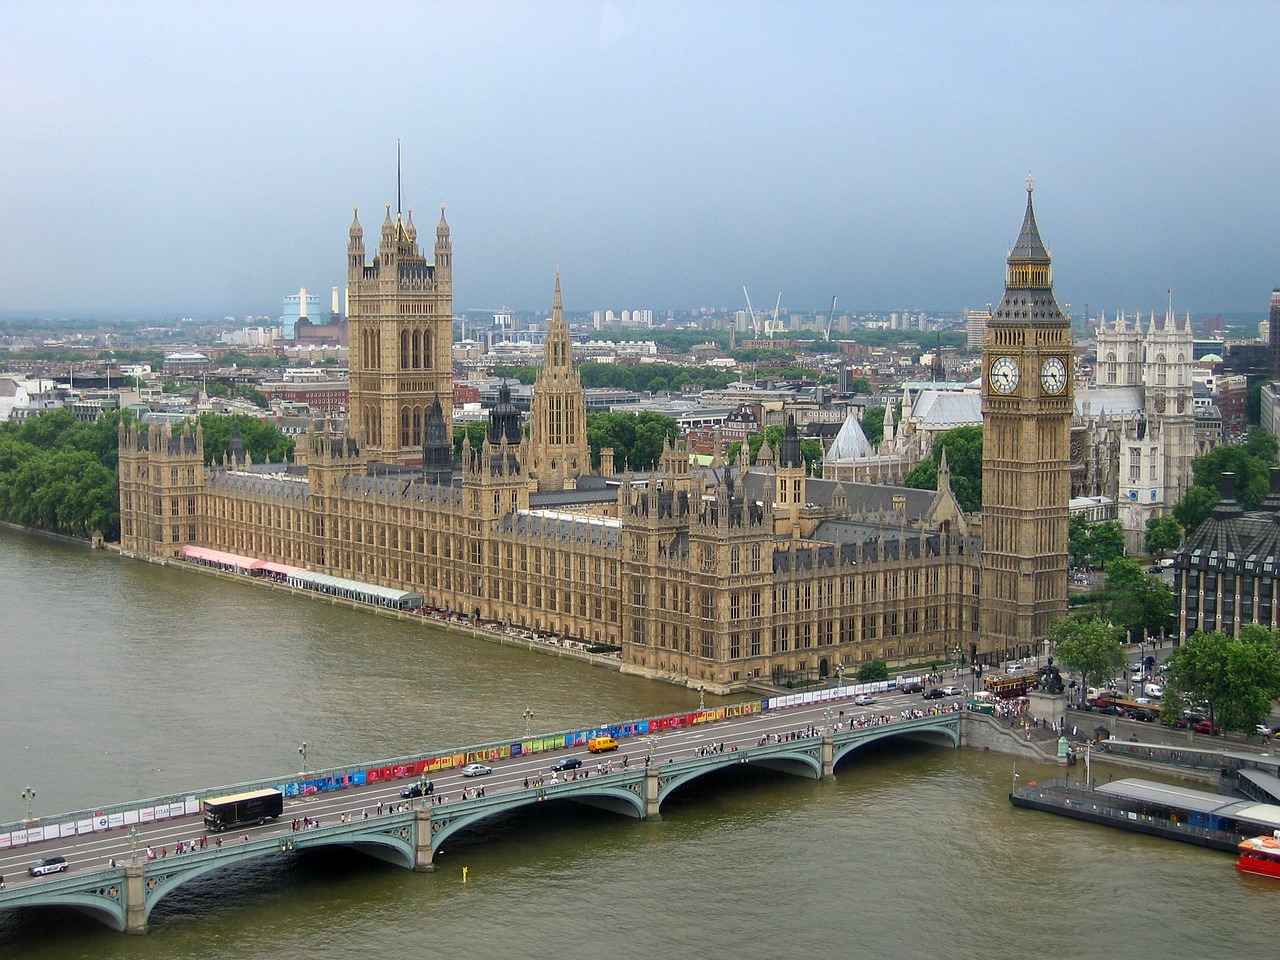 UK Rwanda bill becomes law with Royal Assent